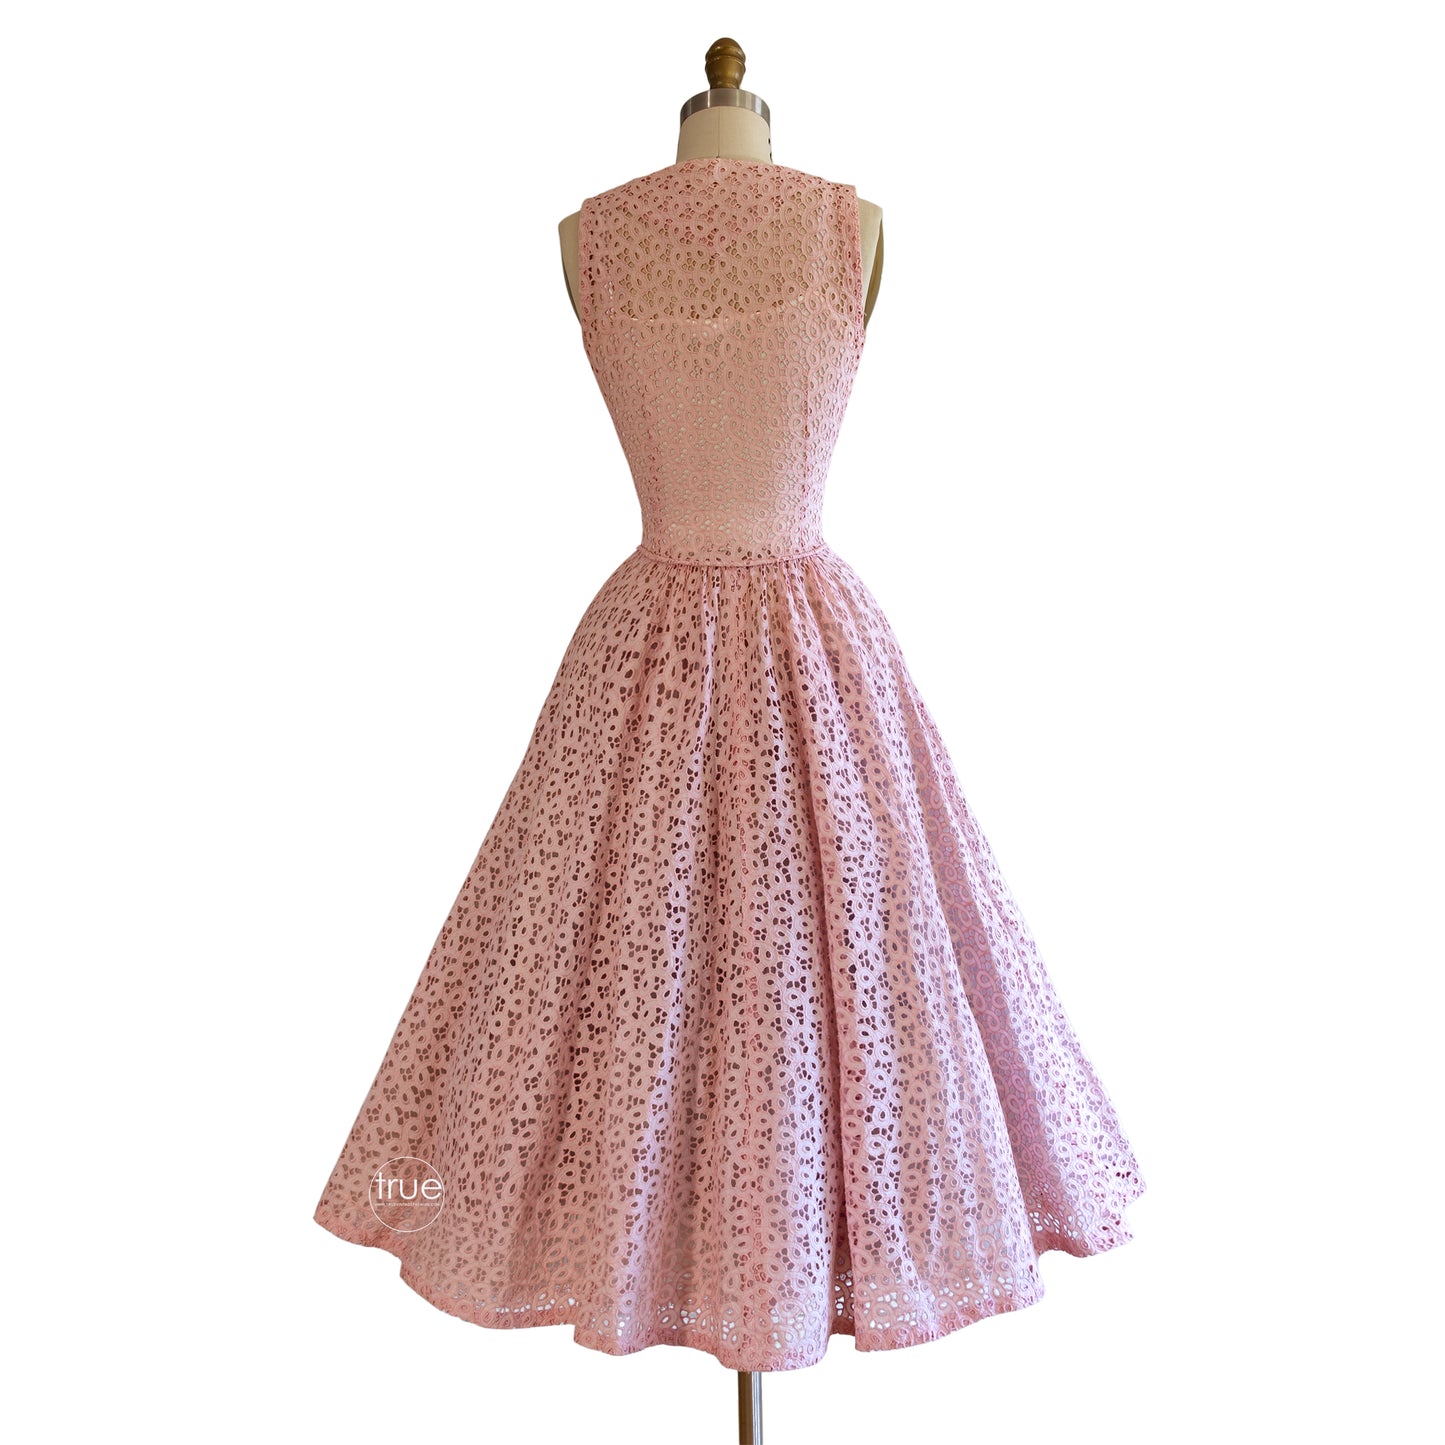 vintage 1950's dress ...flirty pretty in pink cotton eyelet semi sheer full skirt dress